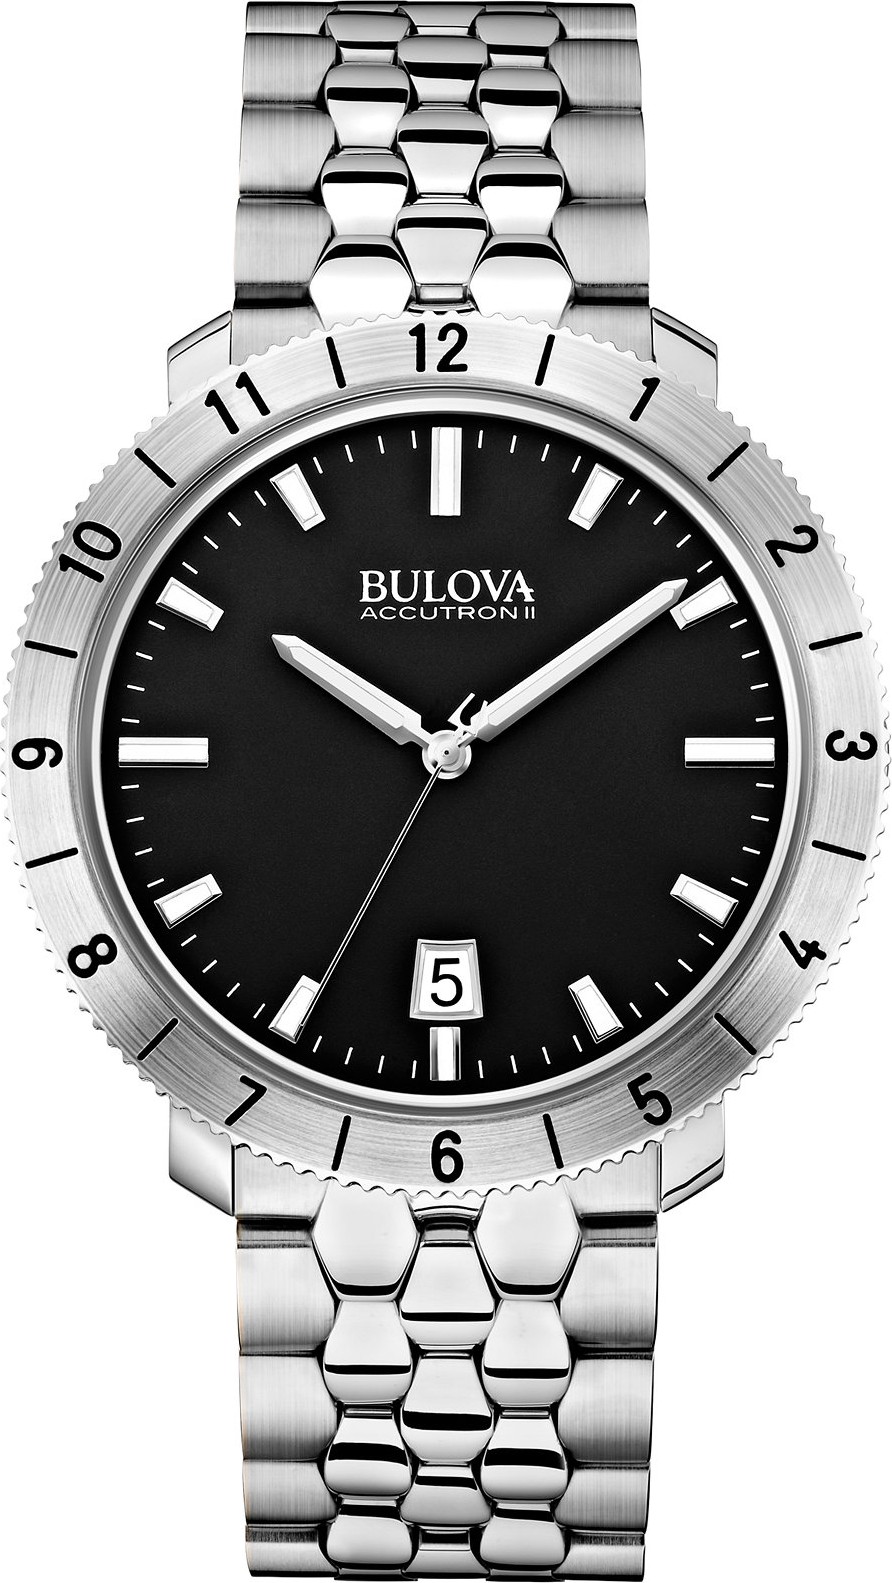 Bulova Accutron II Moonview Watch 42mm 